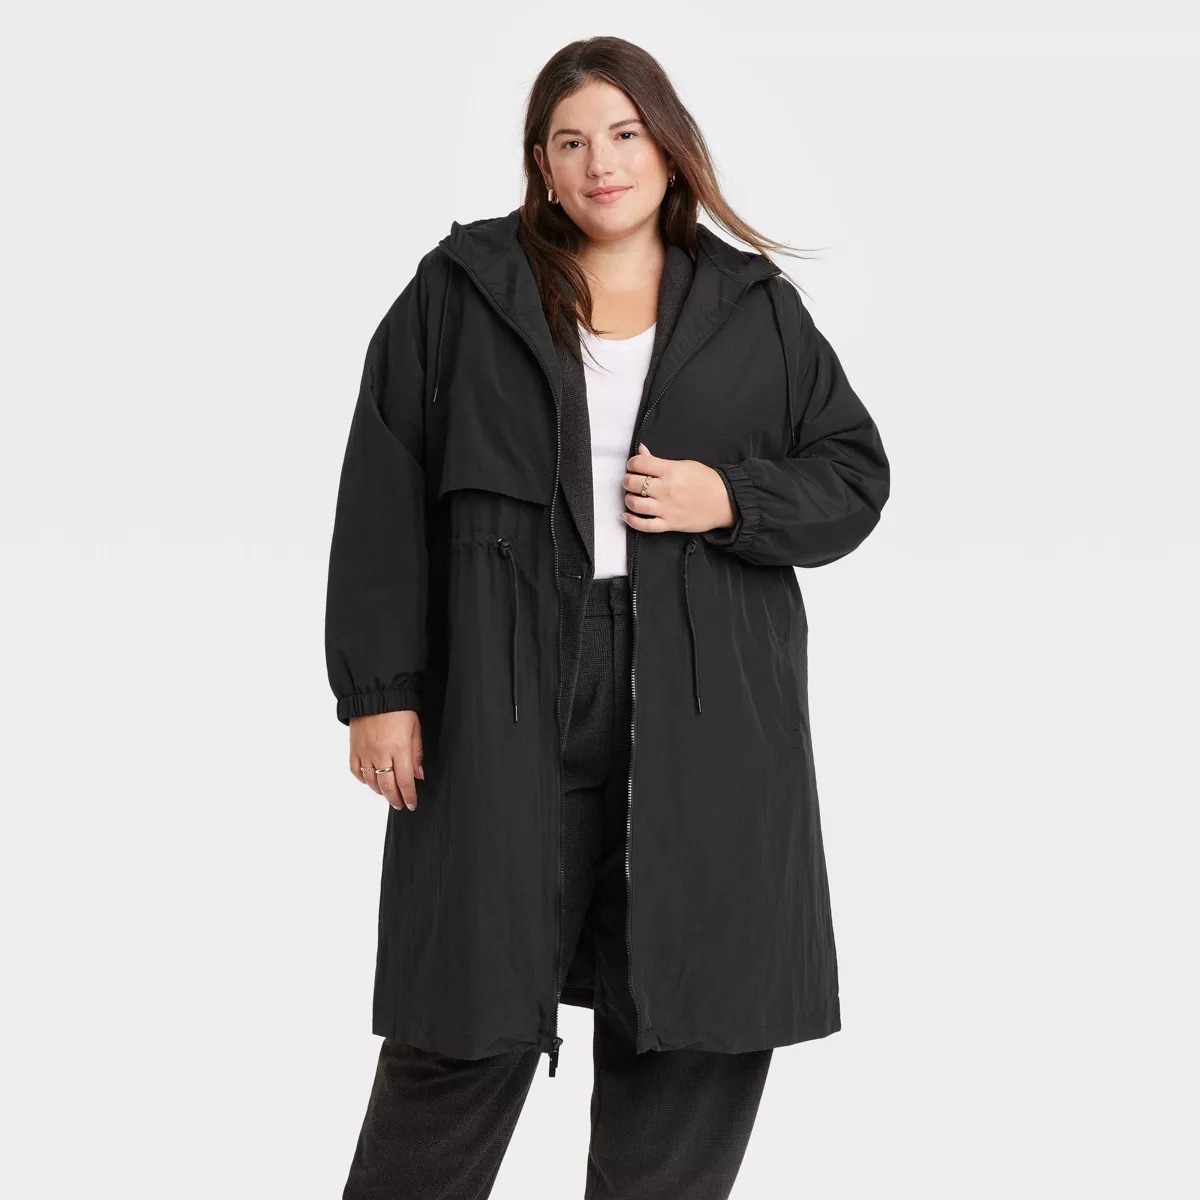 long black raincoat on model